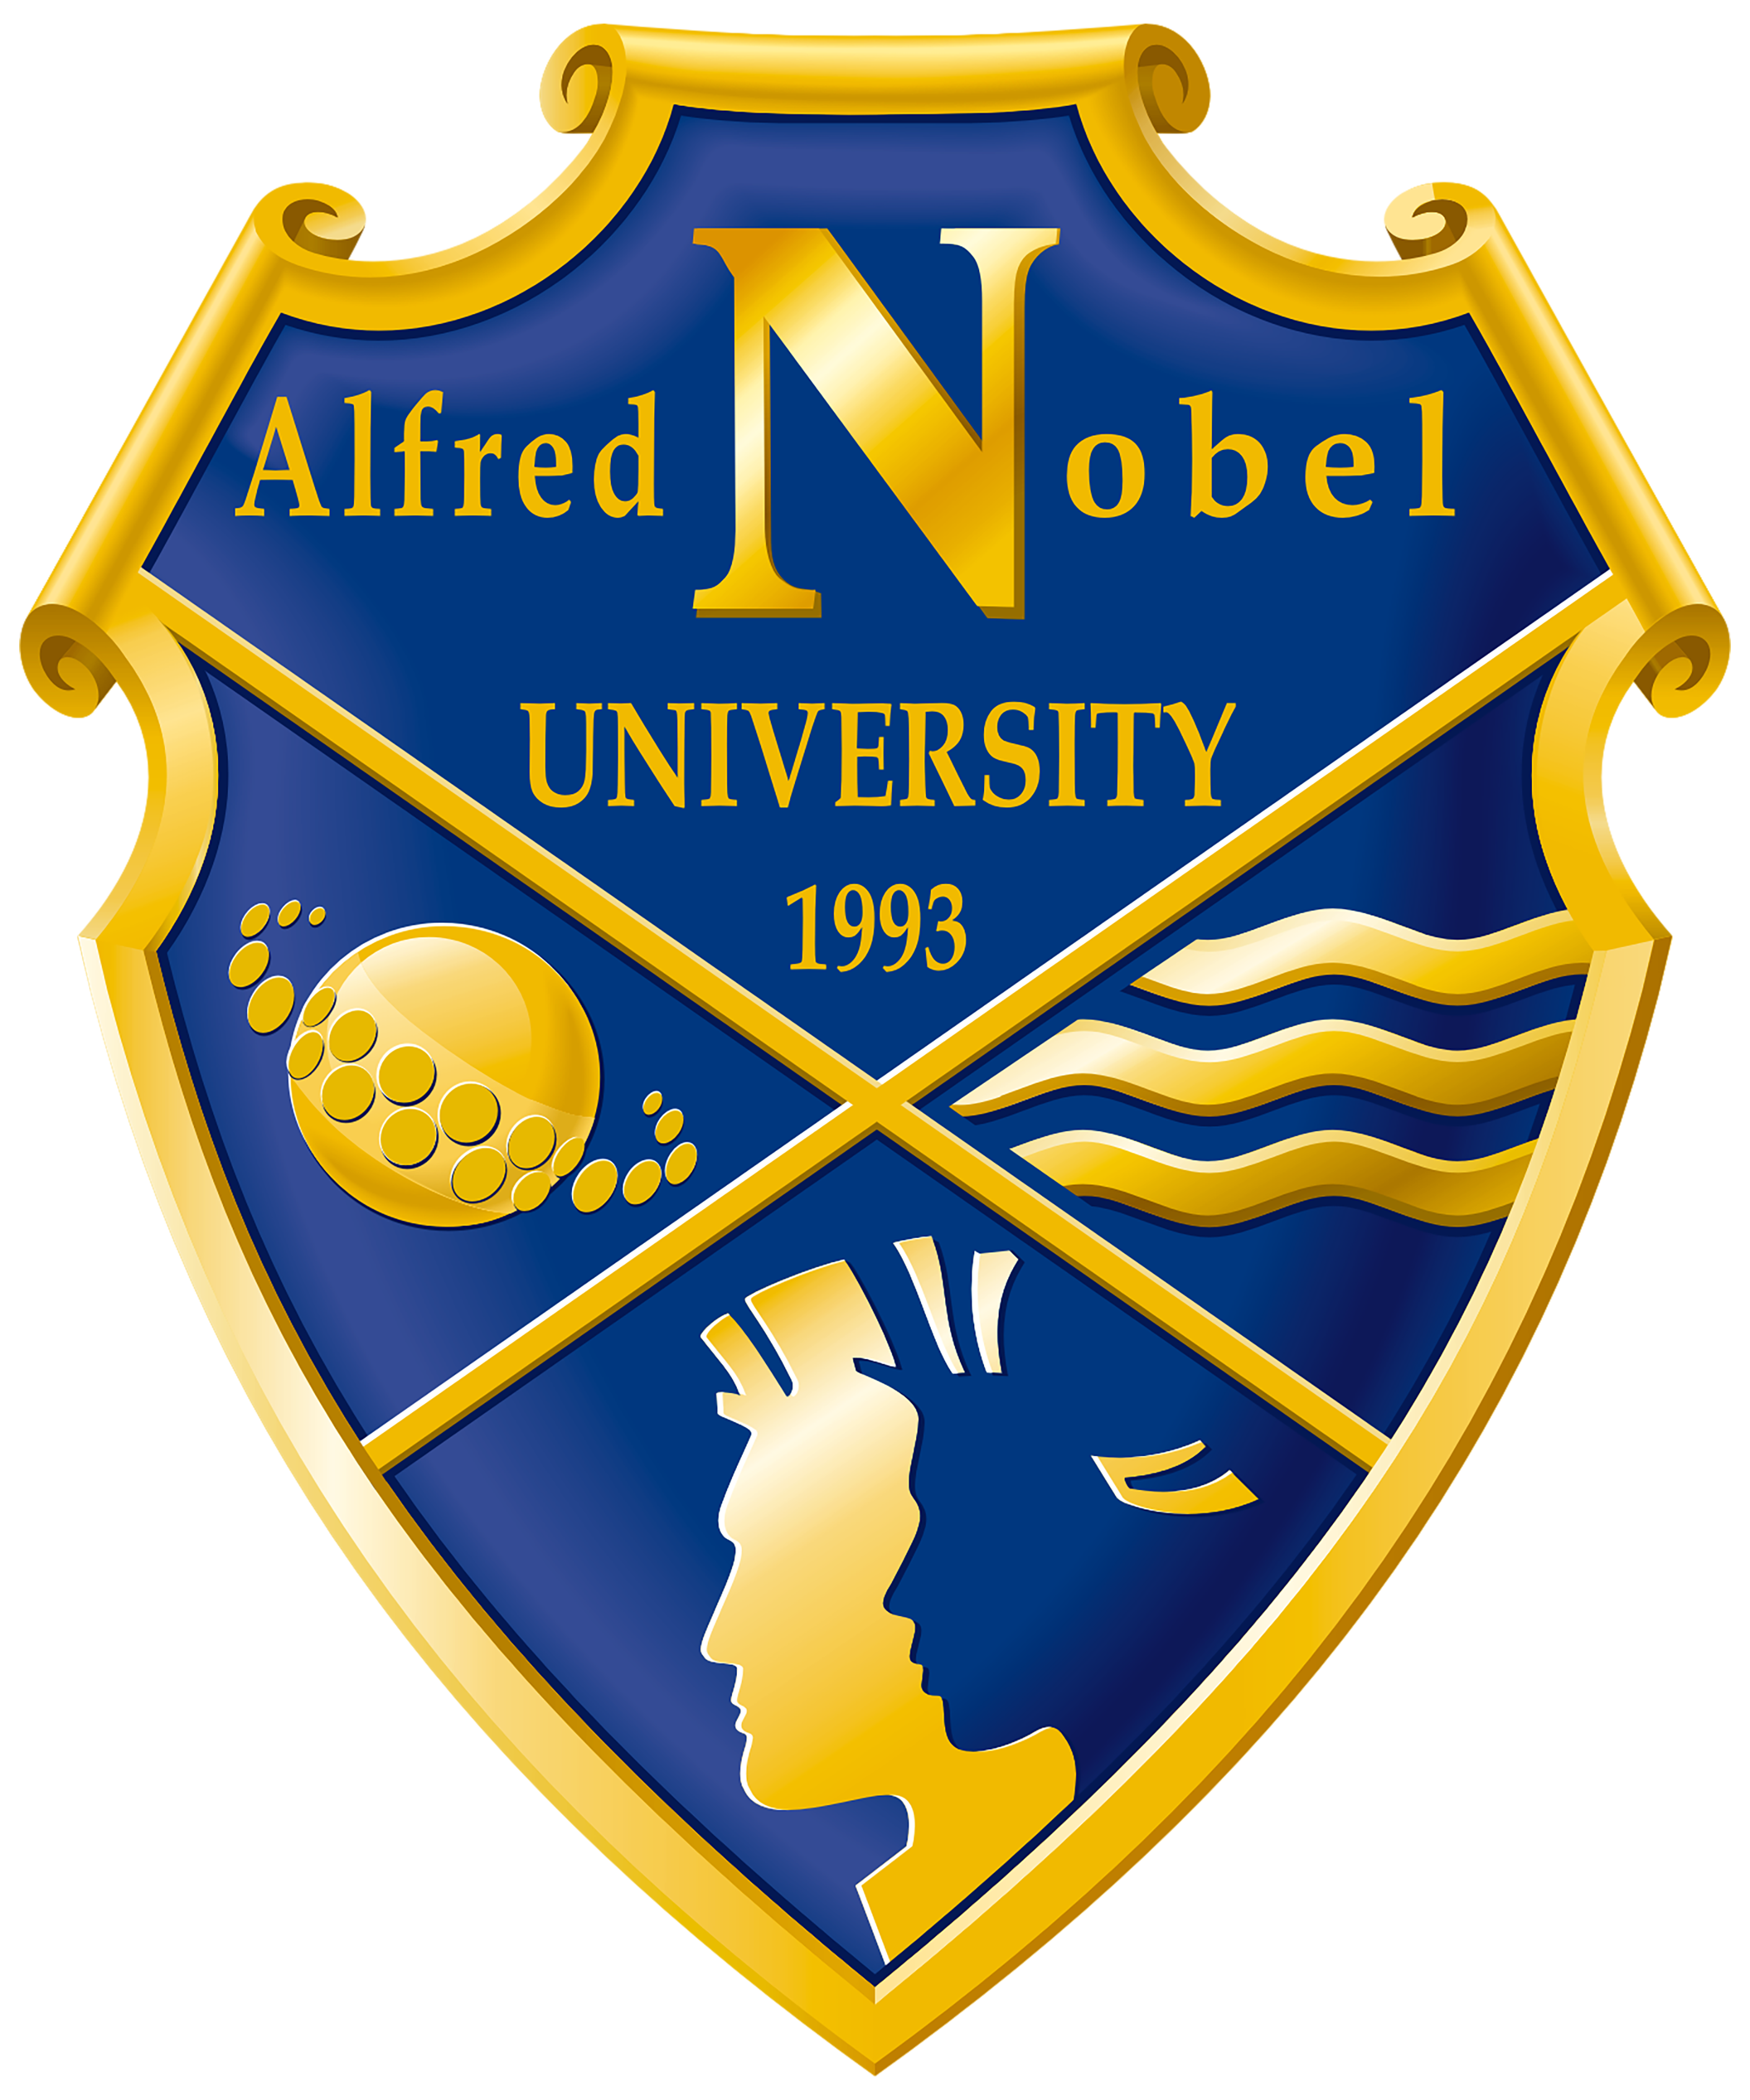 Alfred Nobel University